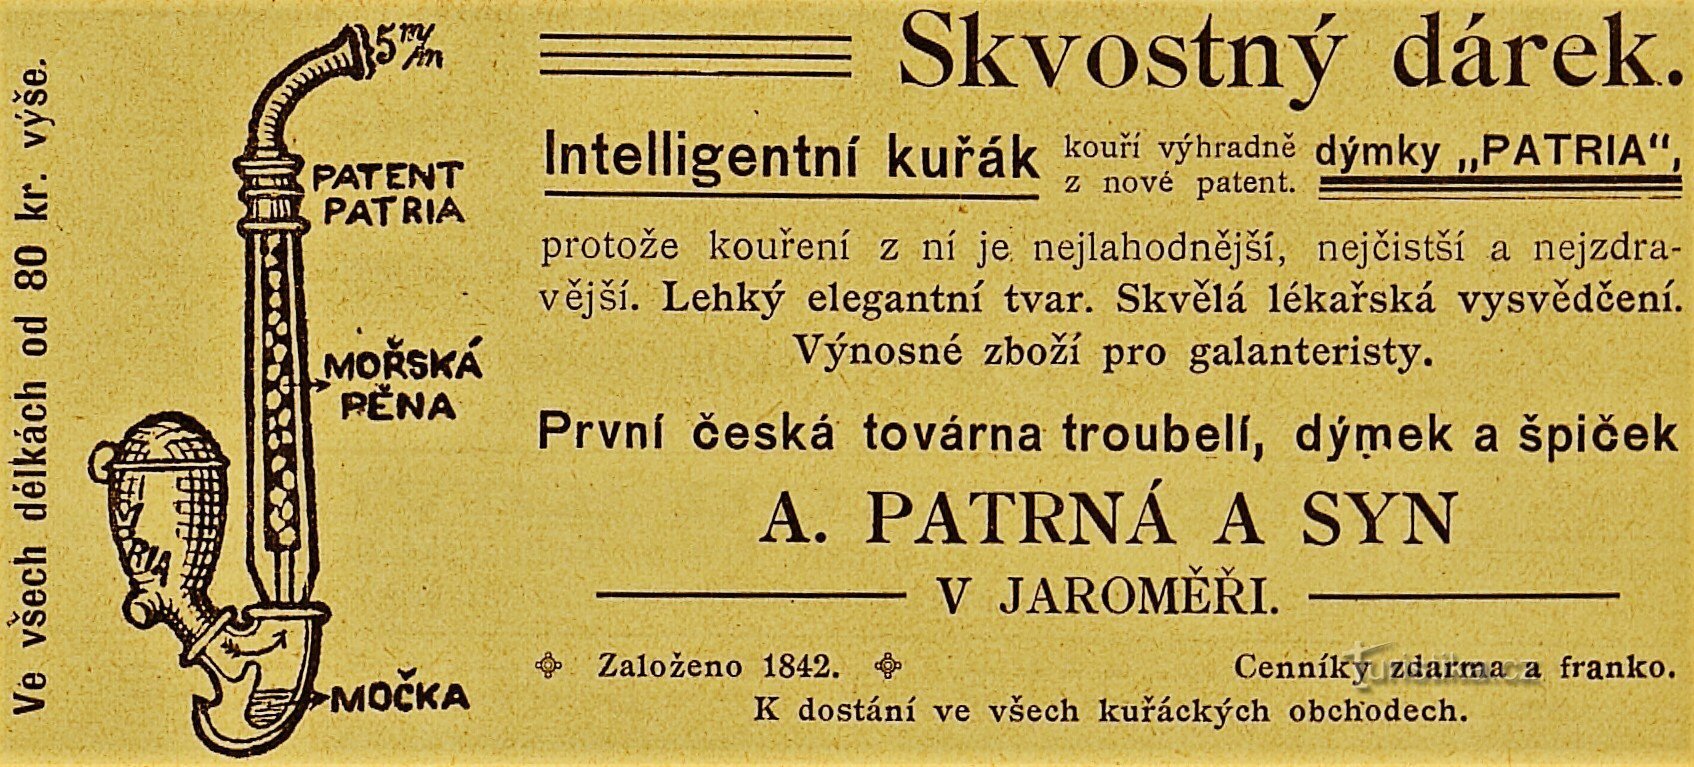 Suvremena reklama tvrtke A. Patrná i sin u Jaroměřu (1901.)